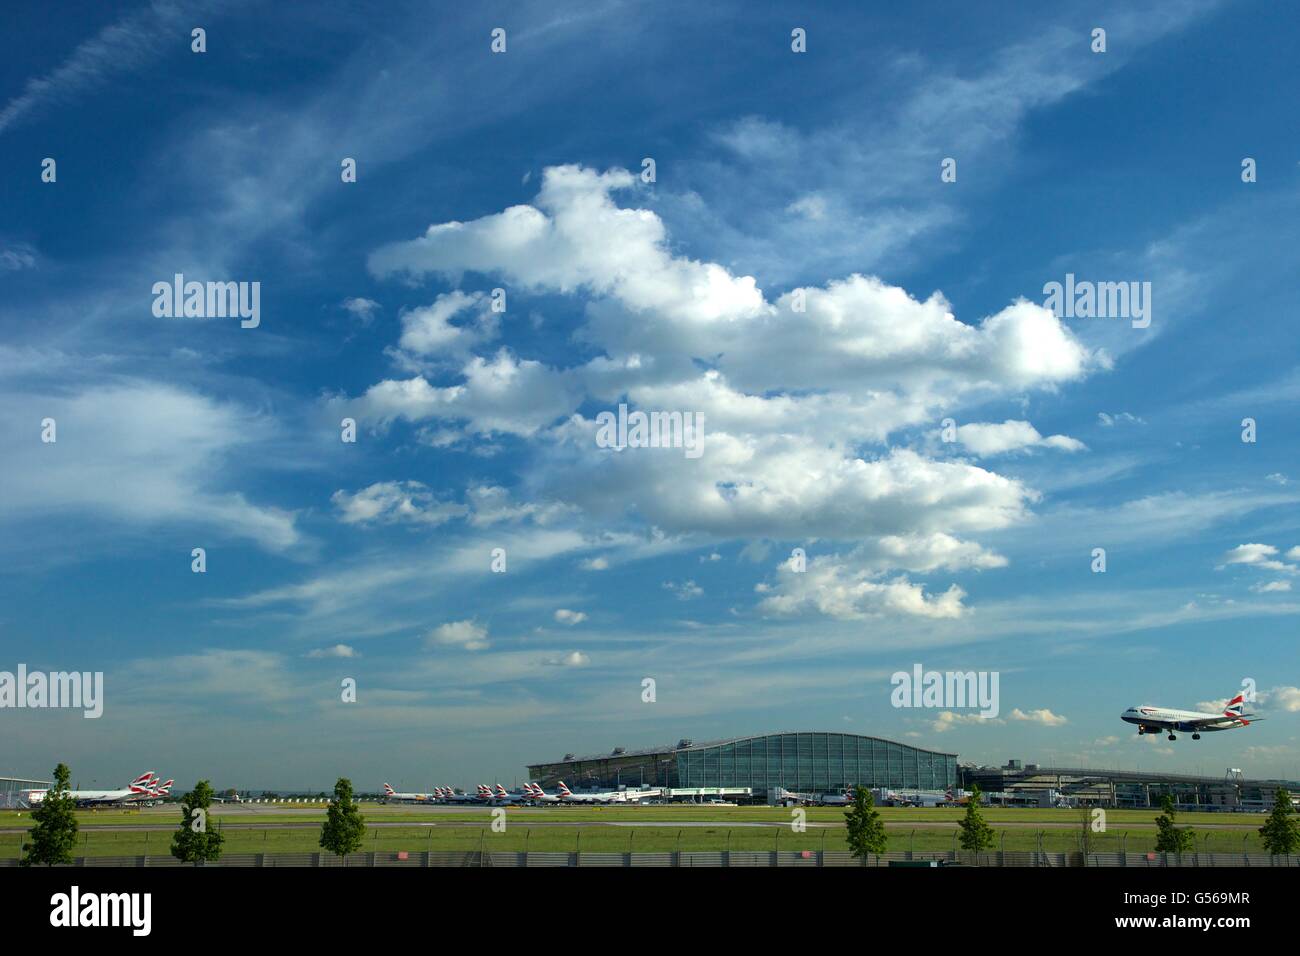 British AIrways flight landing at Heathrow Airport with Terminal 5 behind, London, England, UK, GB, Stock Photo